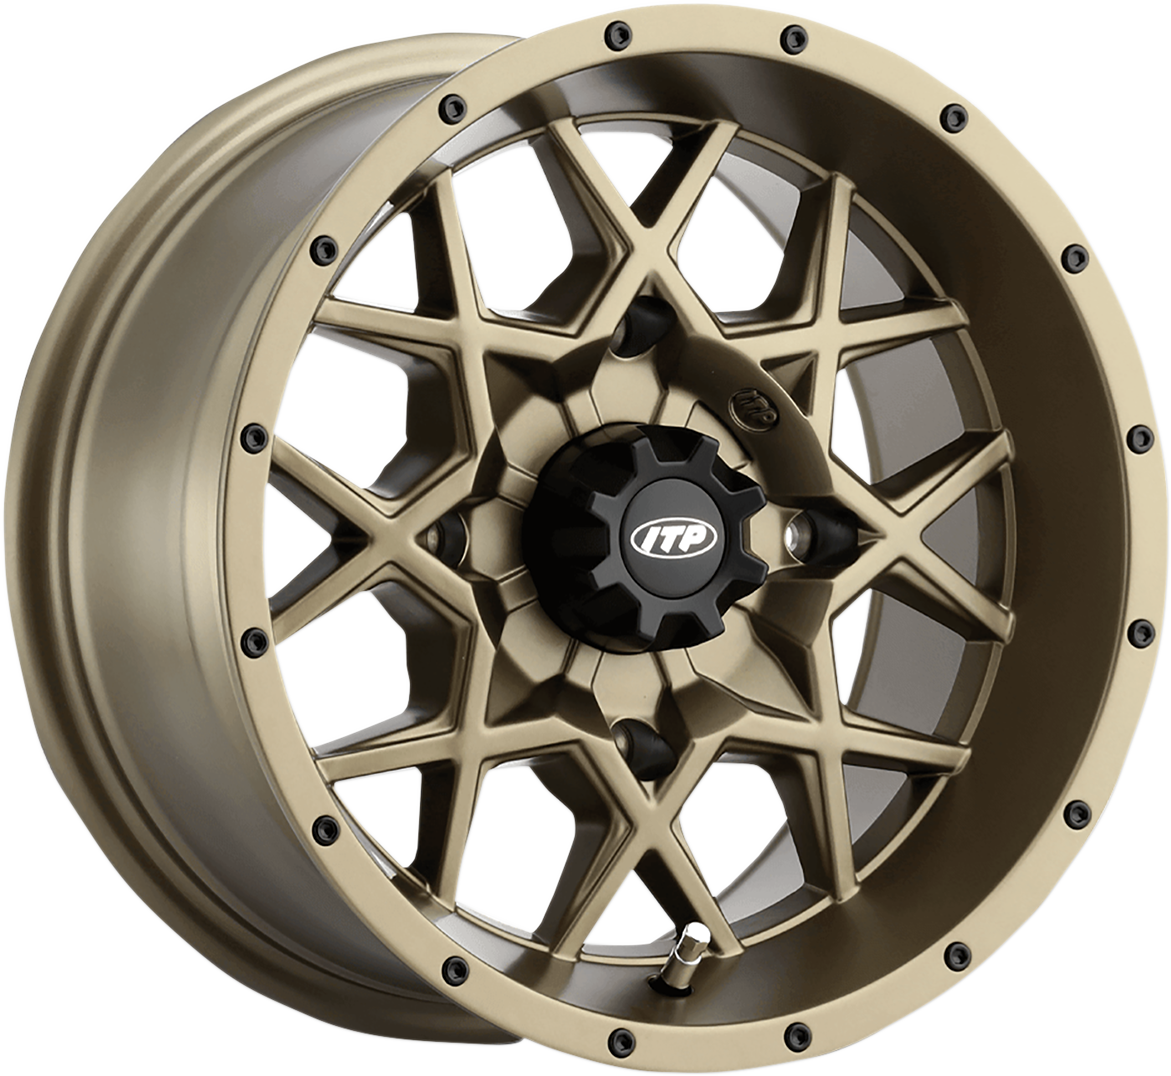 ITP Wheel - Hurricane - Front/Rear - Bronze - 18x6.5 - 4/156 - 4+2.5 (+10 mm) 1822516729B